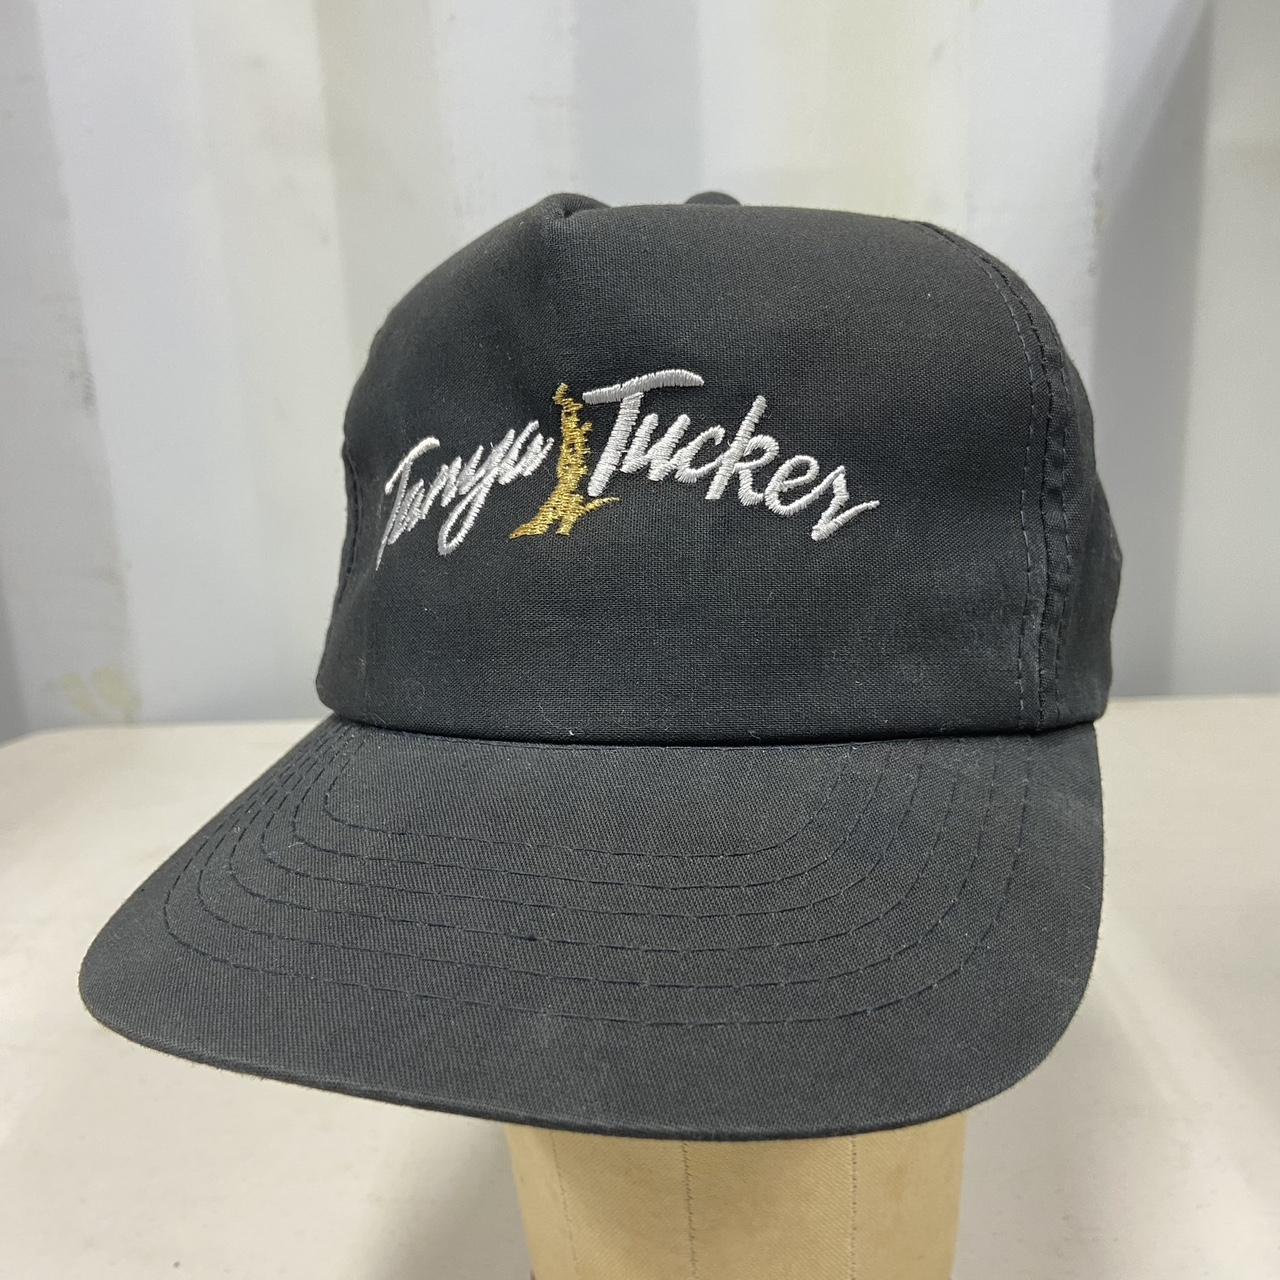 Vintage Tanya tucker country music tour snapback hat - Depop